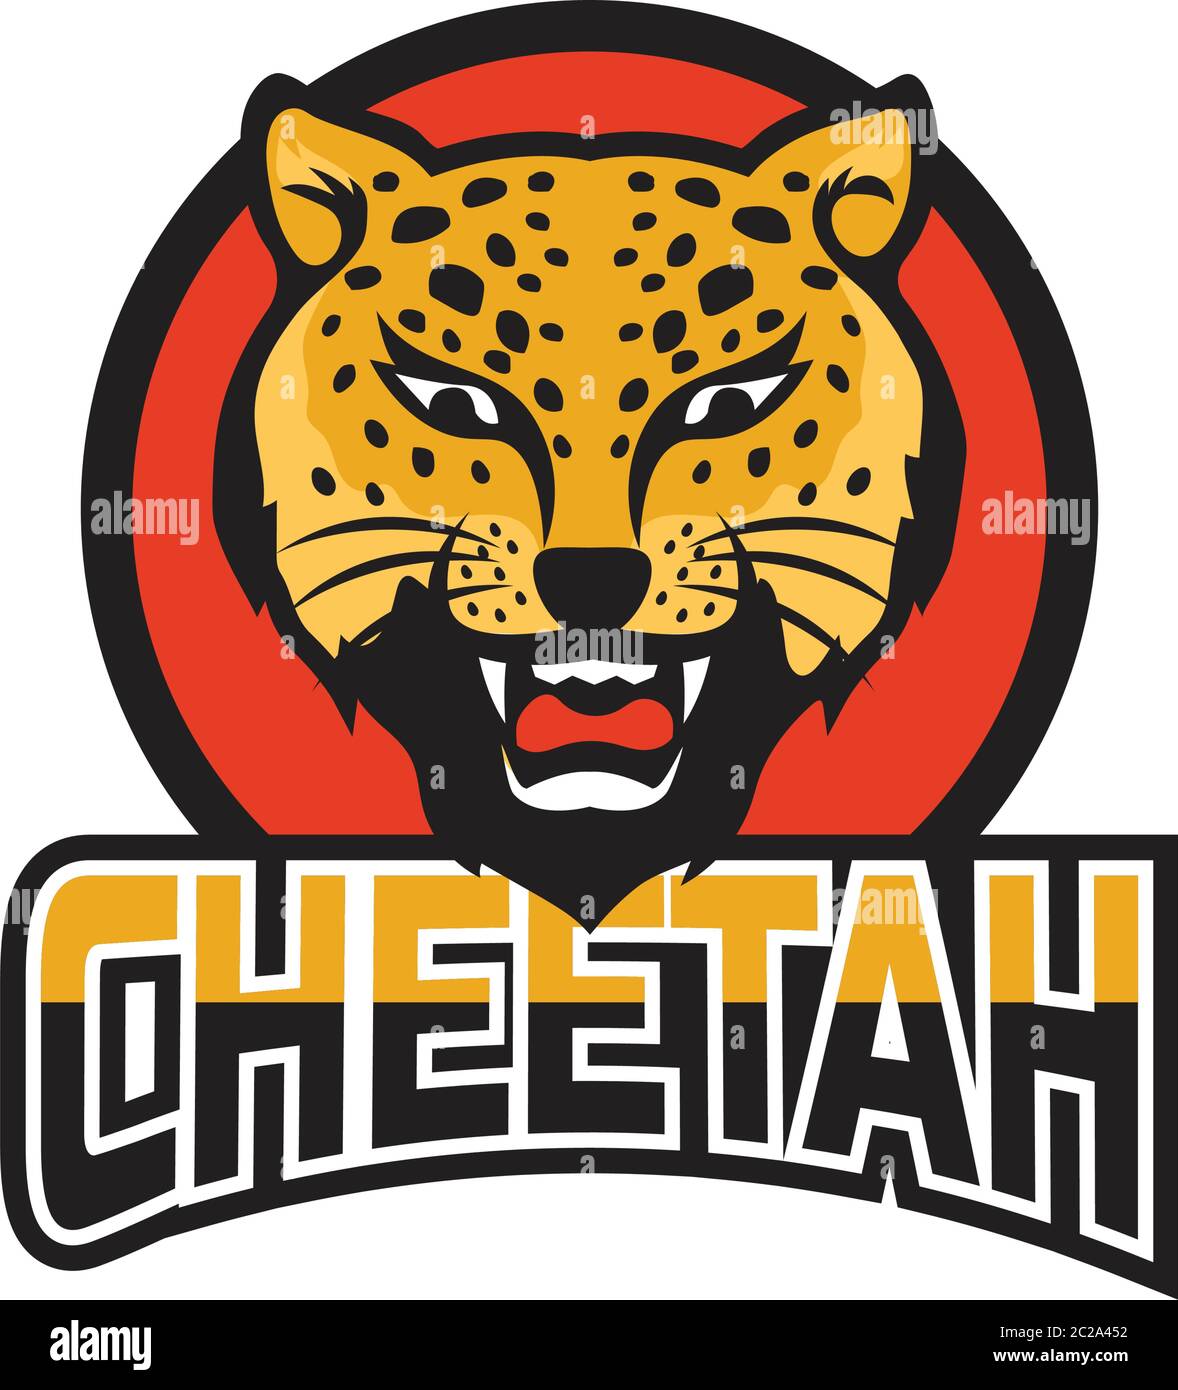 cheetah logo design (556240)